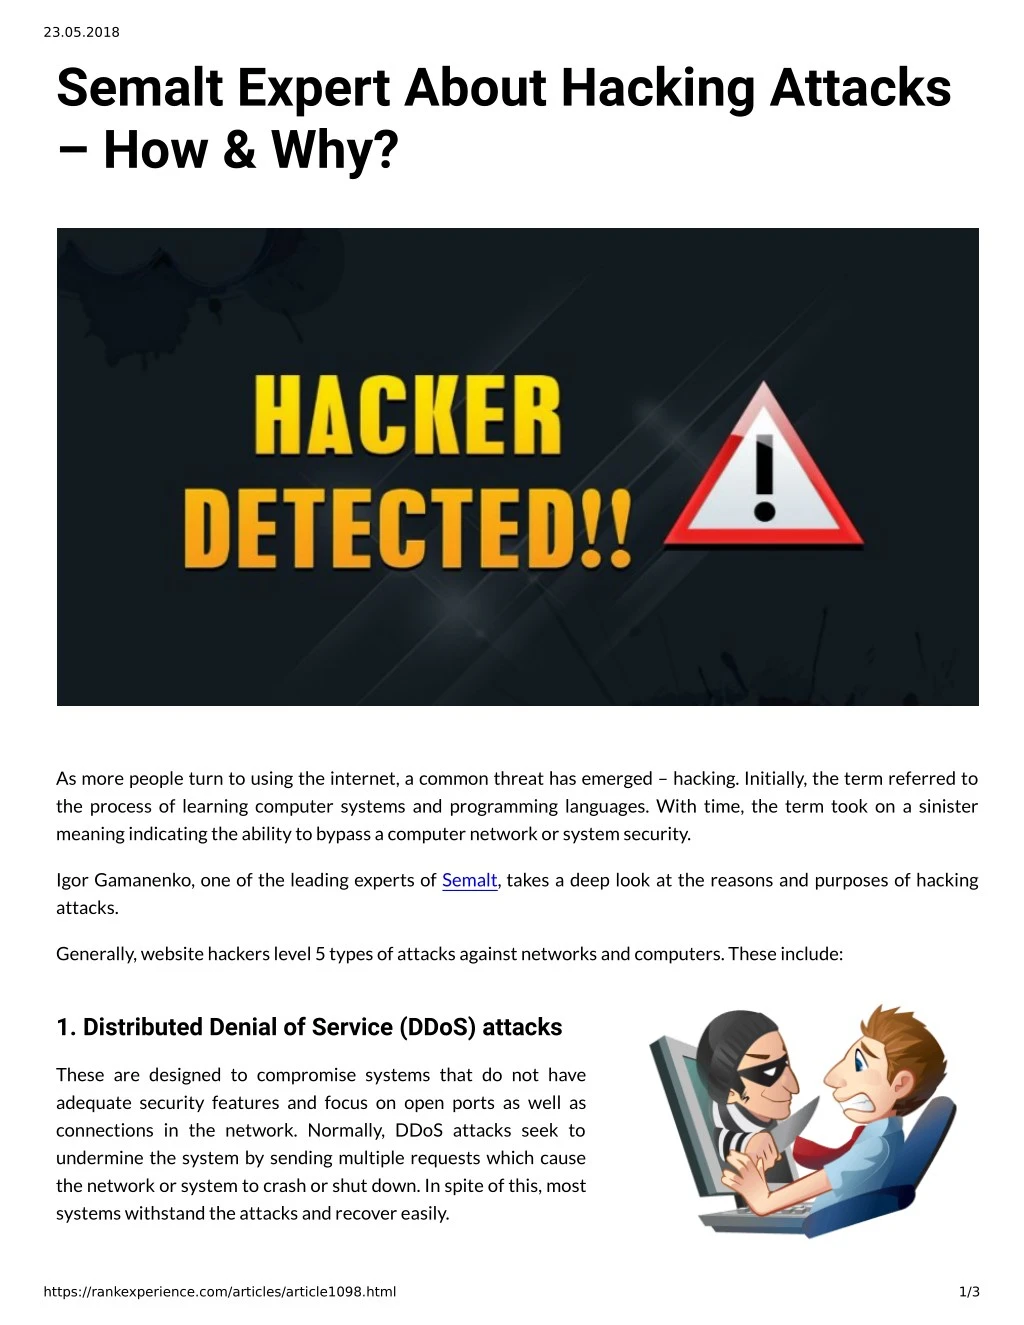 23 05 2018 semalt expert about hacking attacks